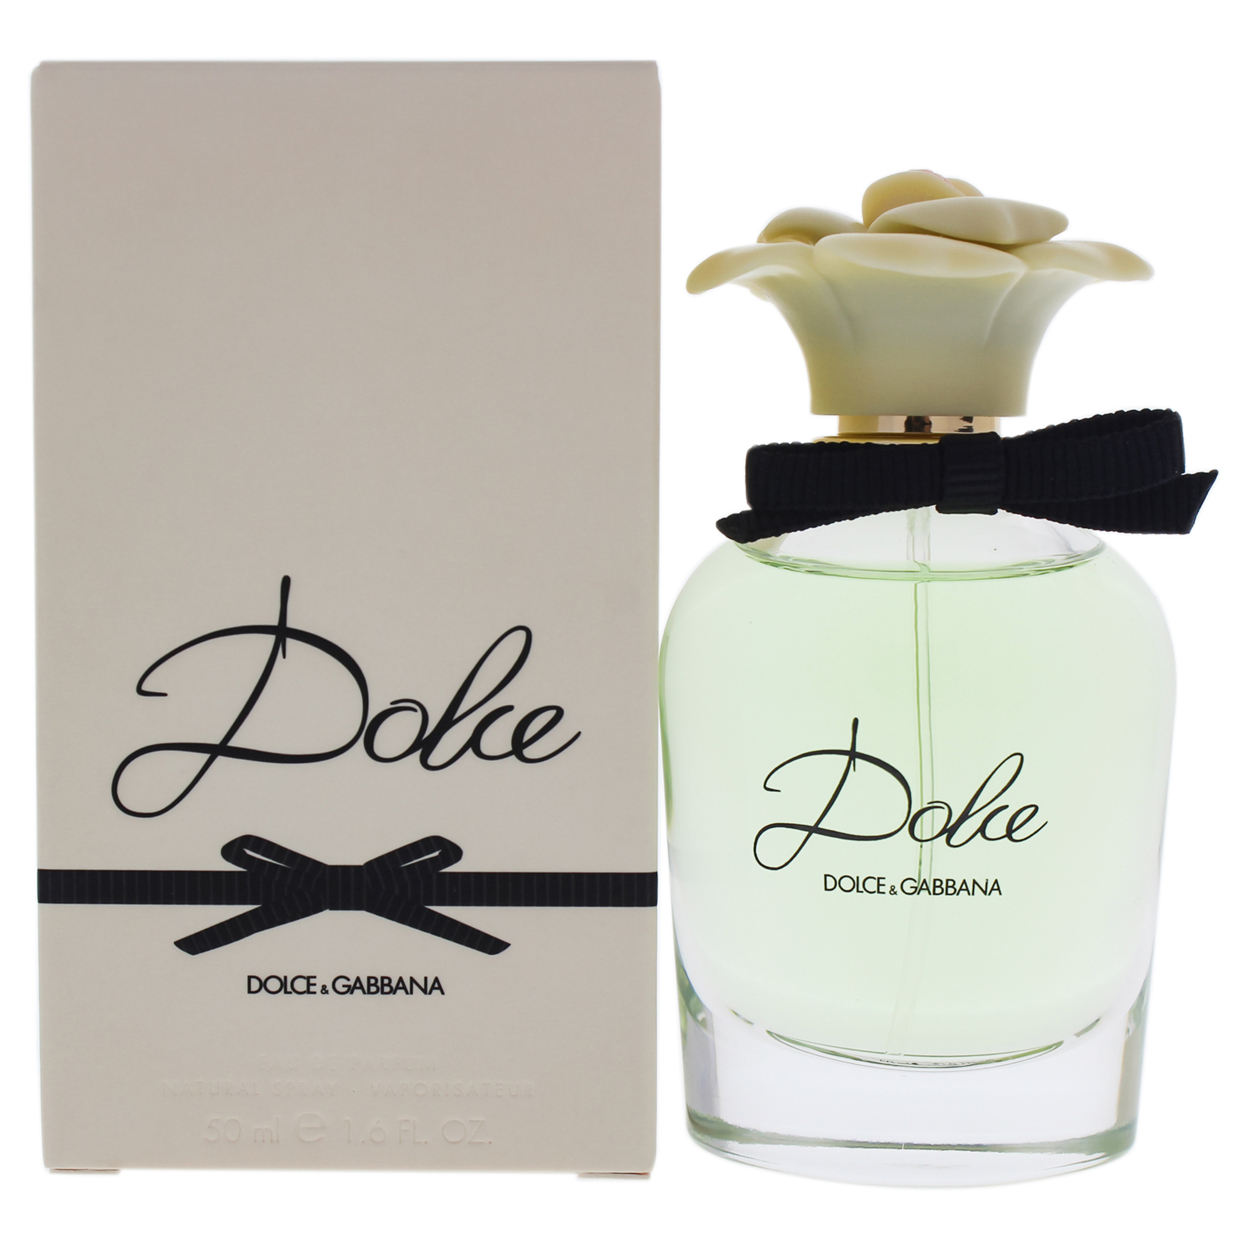 Dolce & Gabbana Dolce by Dolce & Gabbana for Women Eau de Parfum Spray 1.6 oz